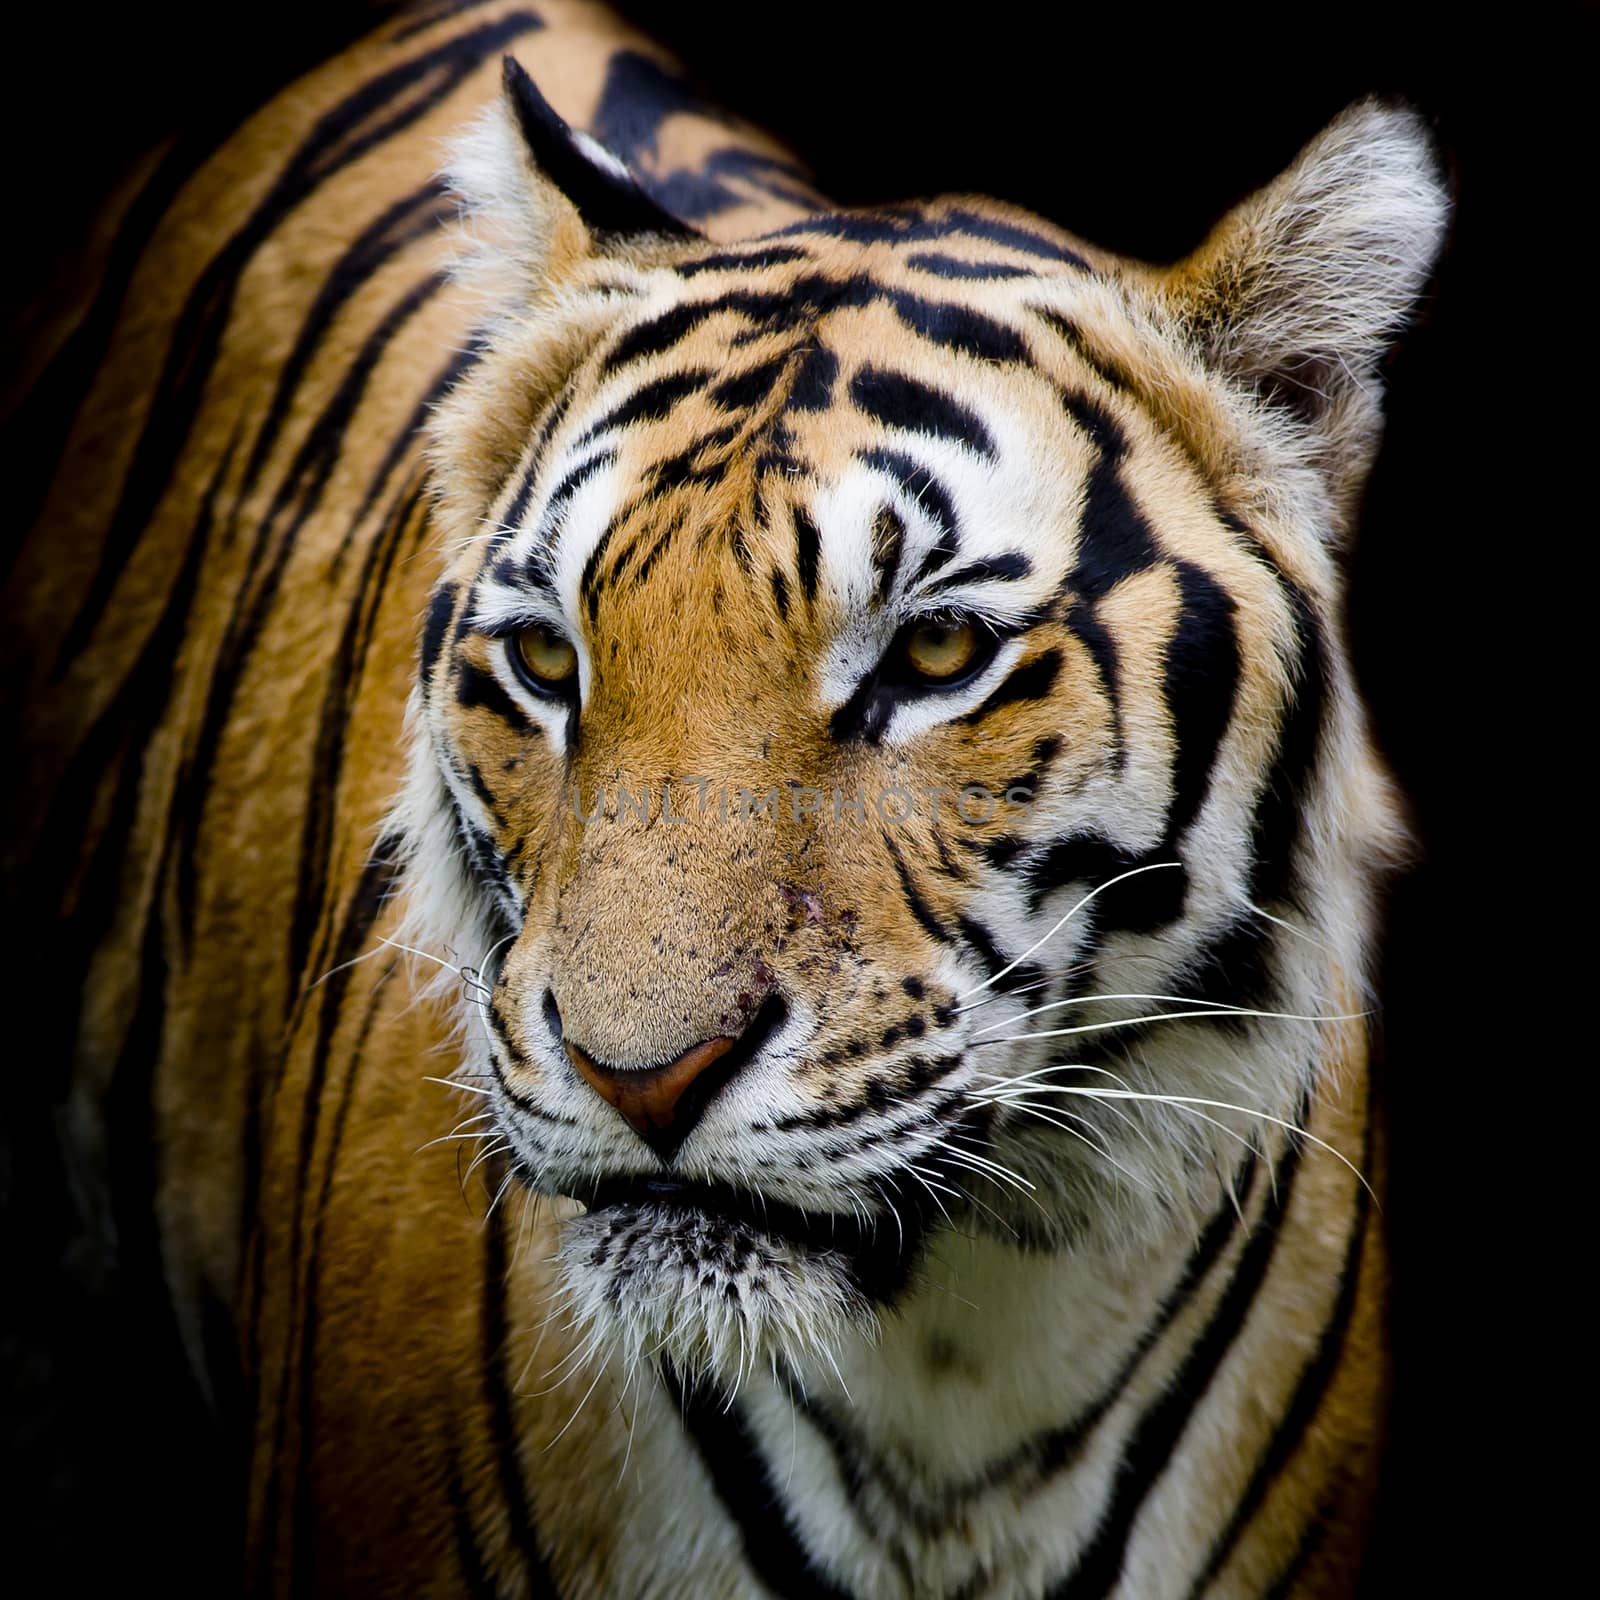 Tiger by art9858